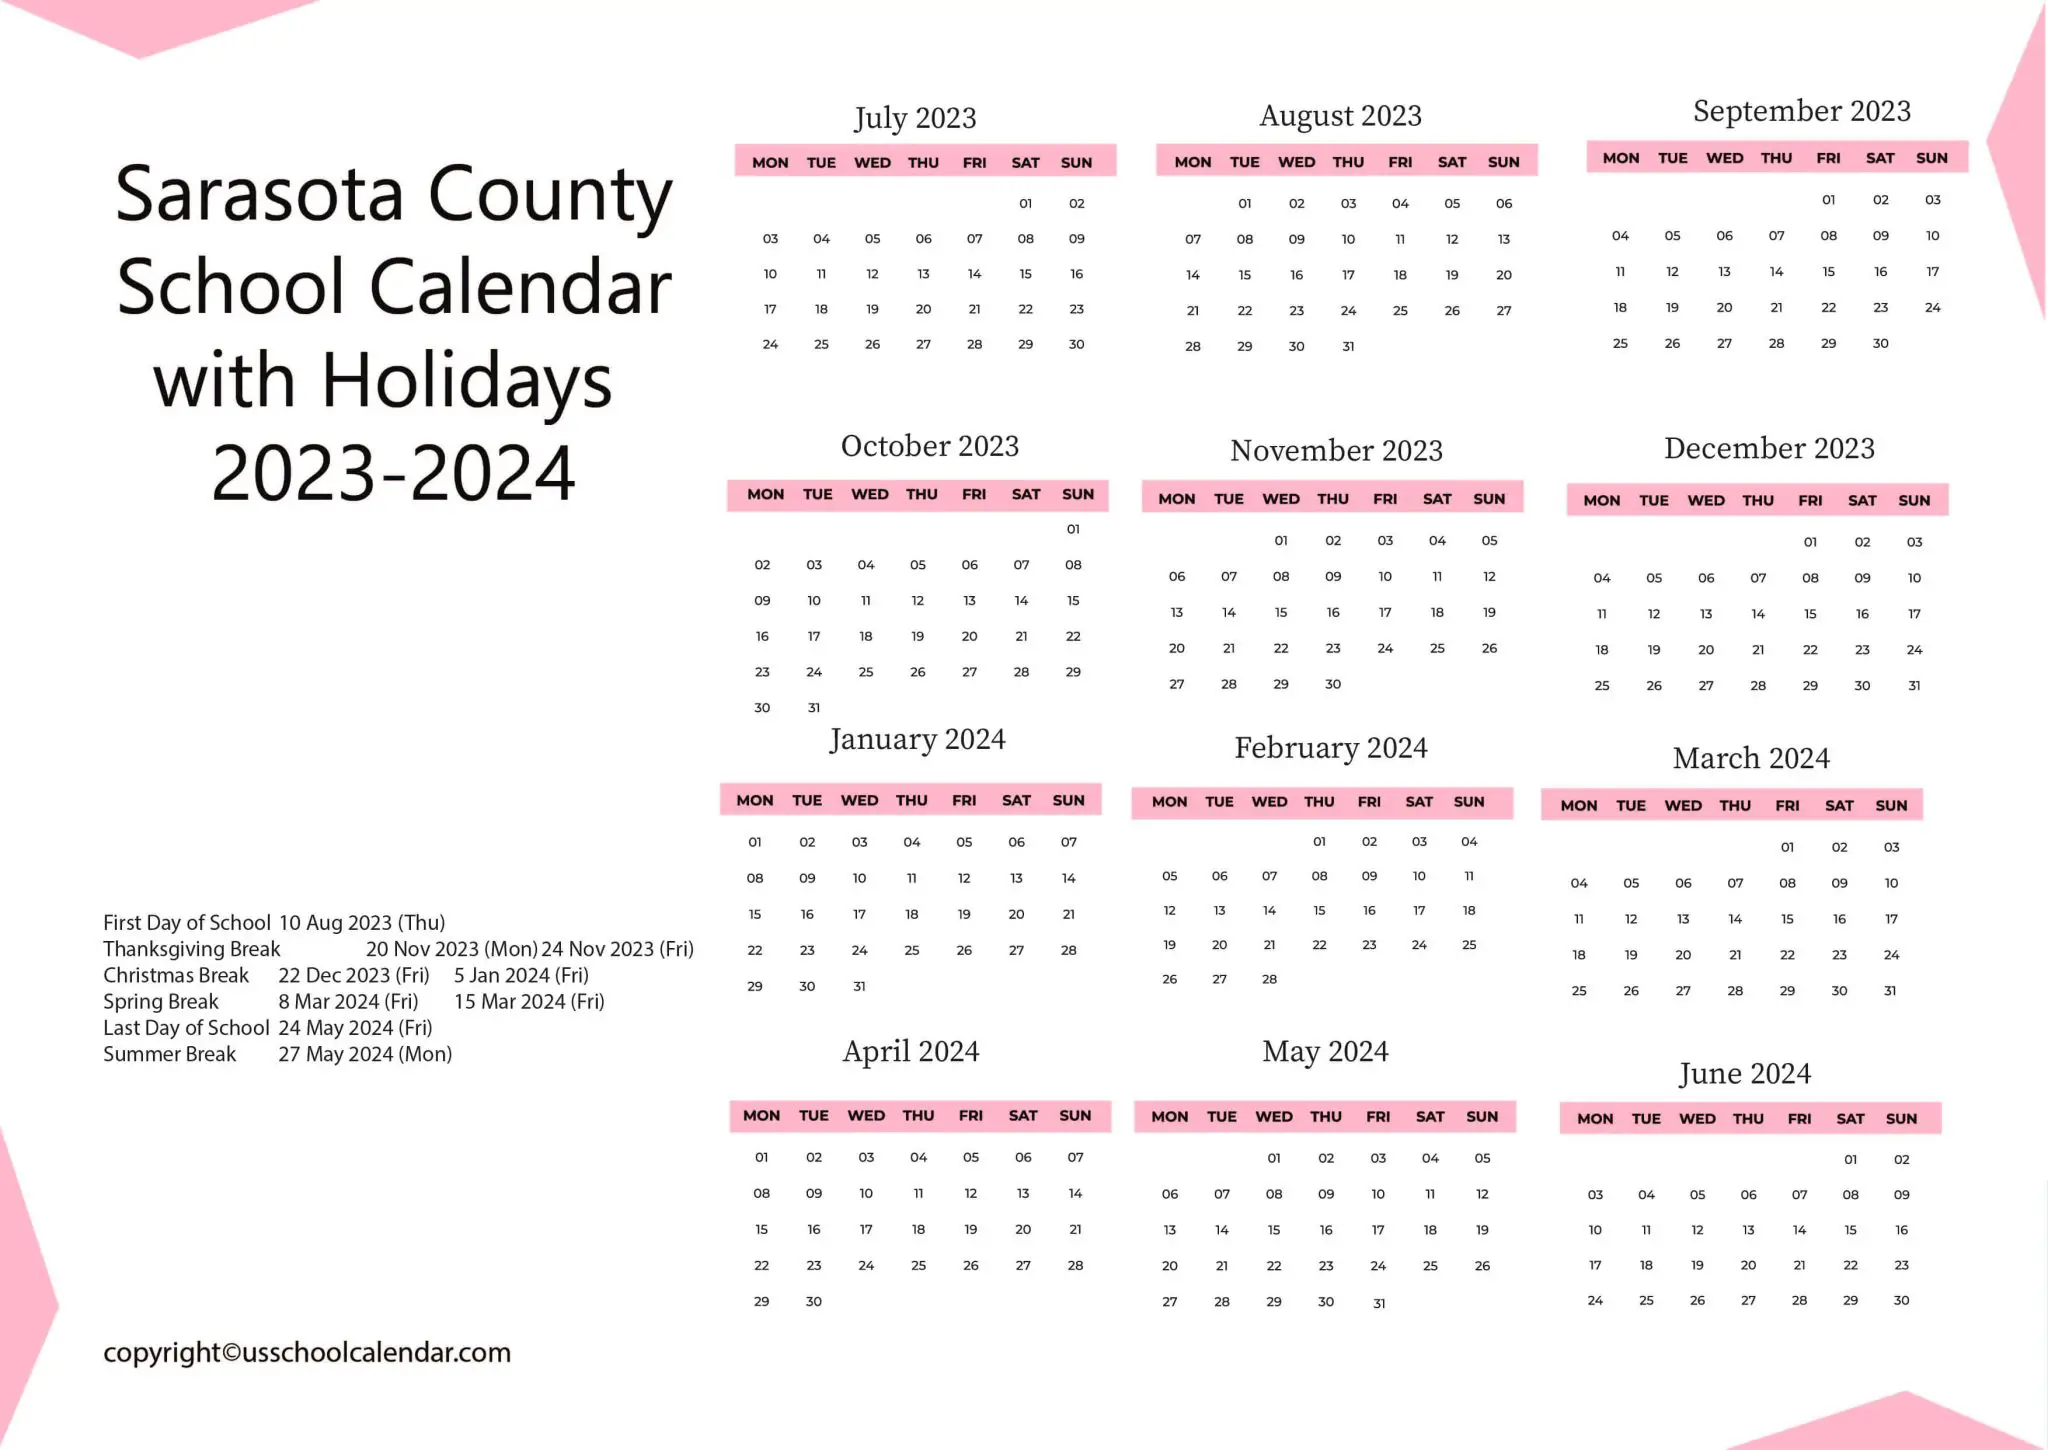 sarasota-county-school-calendar-with-holidays-2023-2024